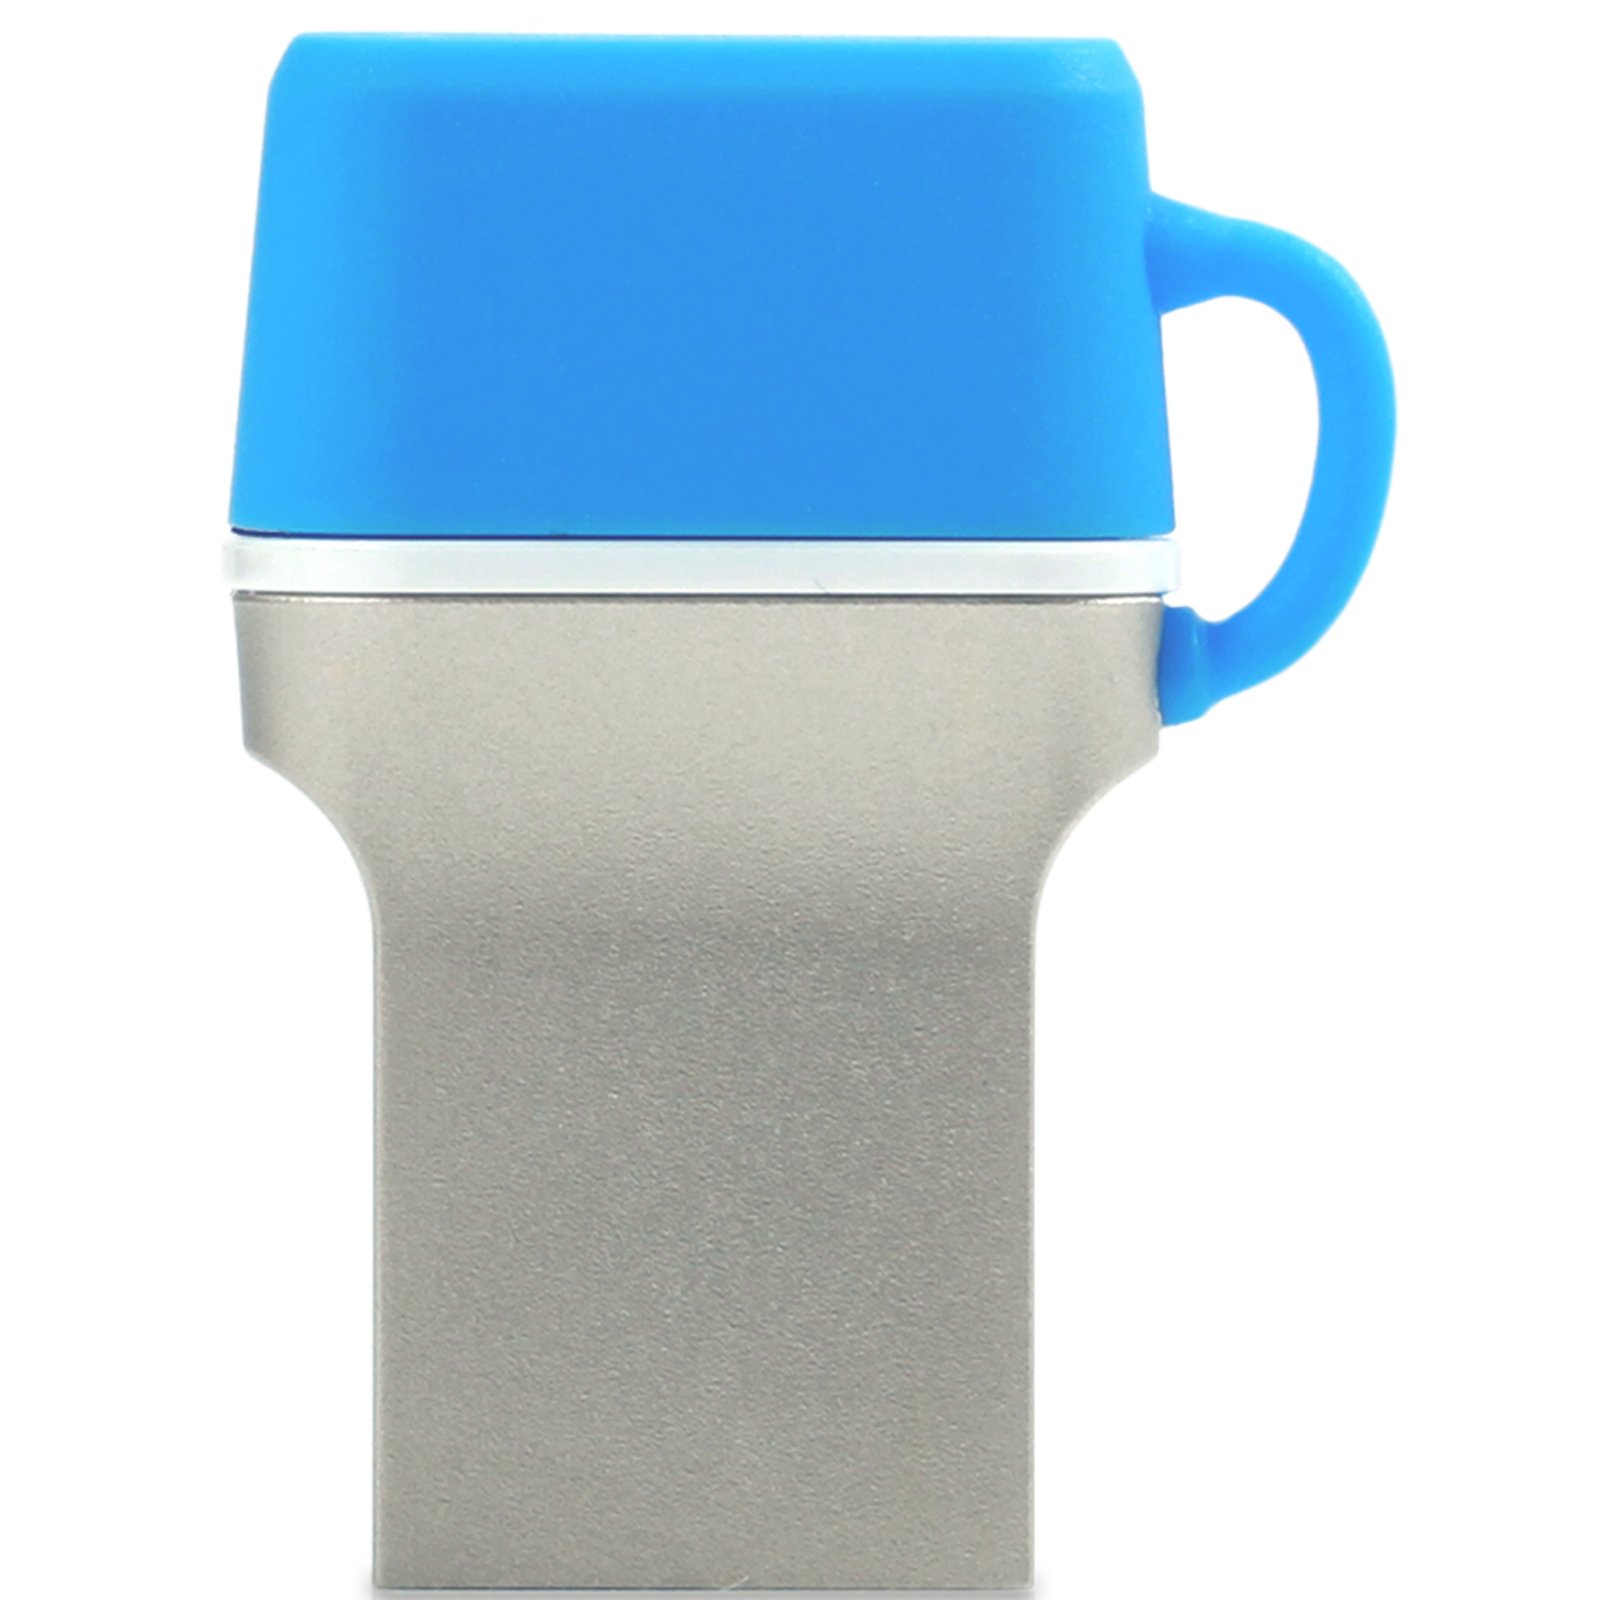 USB флеш накопитель Goodram 64GB DualDrive C Blue USB 3.0 (PD64GH3GRDDCBR10)